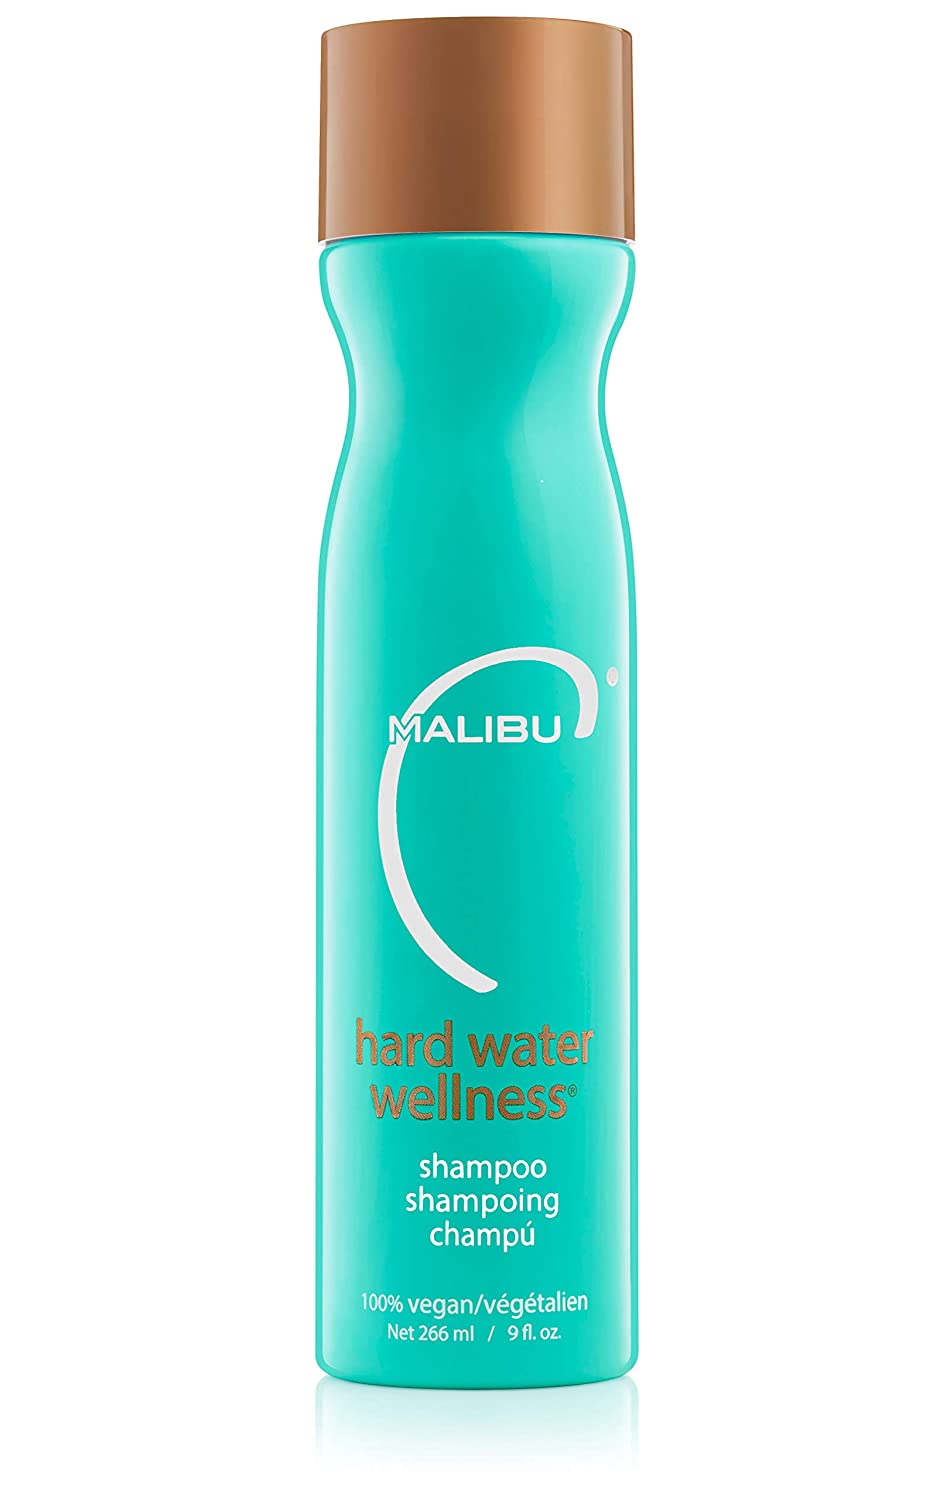 Malibu C Hard Water Shampoo